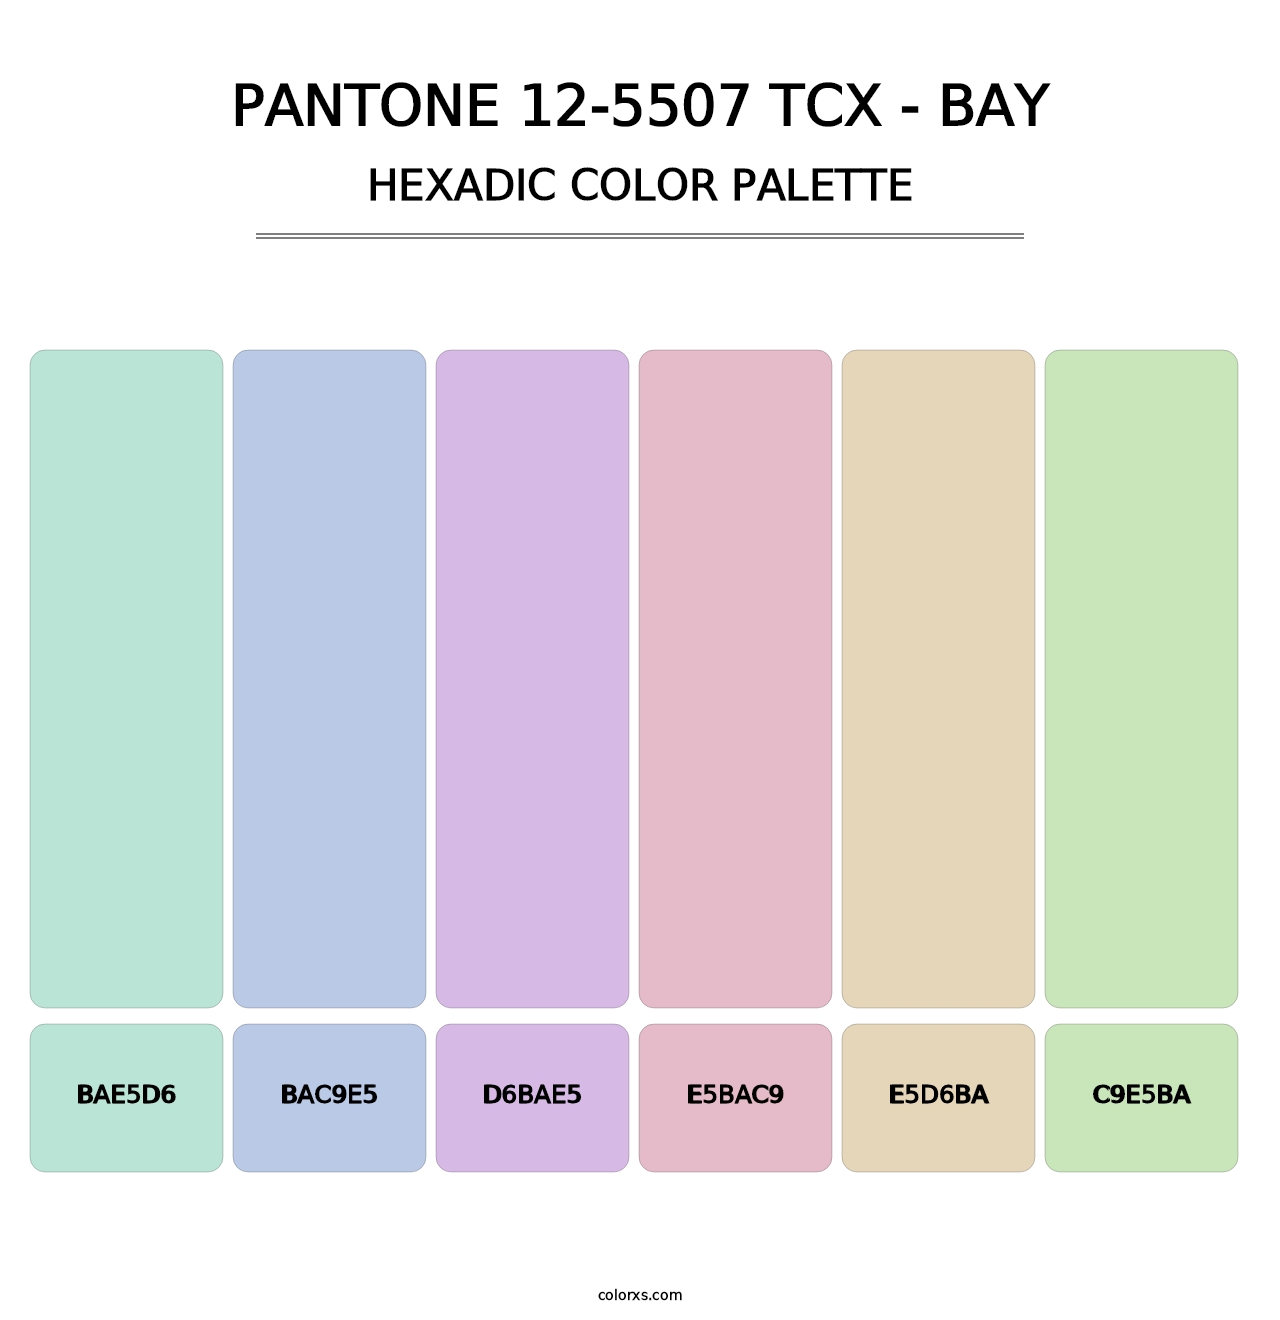 PANTONE 12-5507 TCX - Bay - Hexadic Color Palette